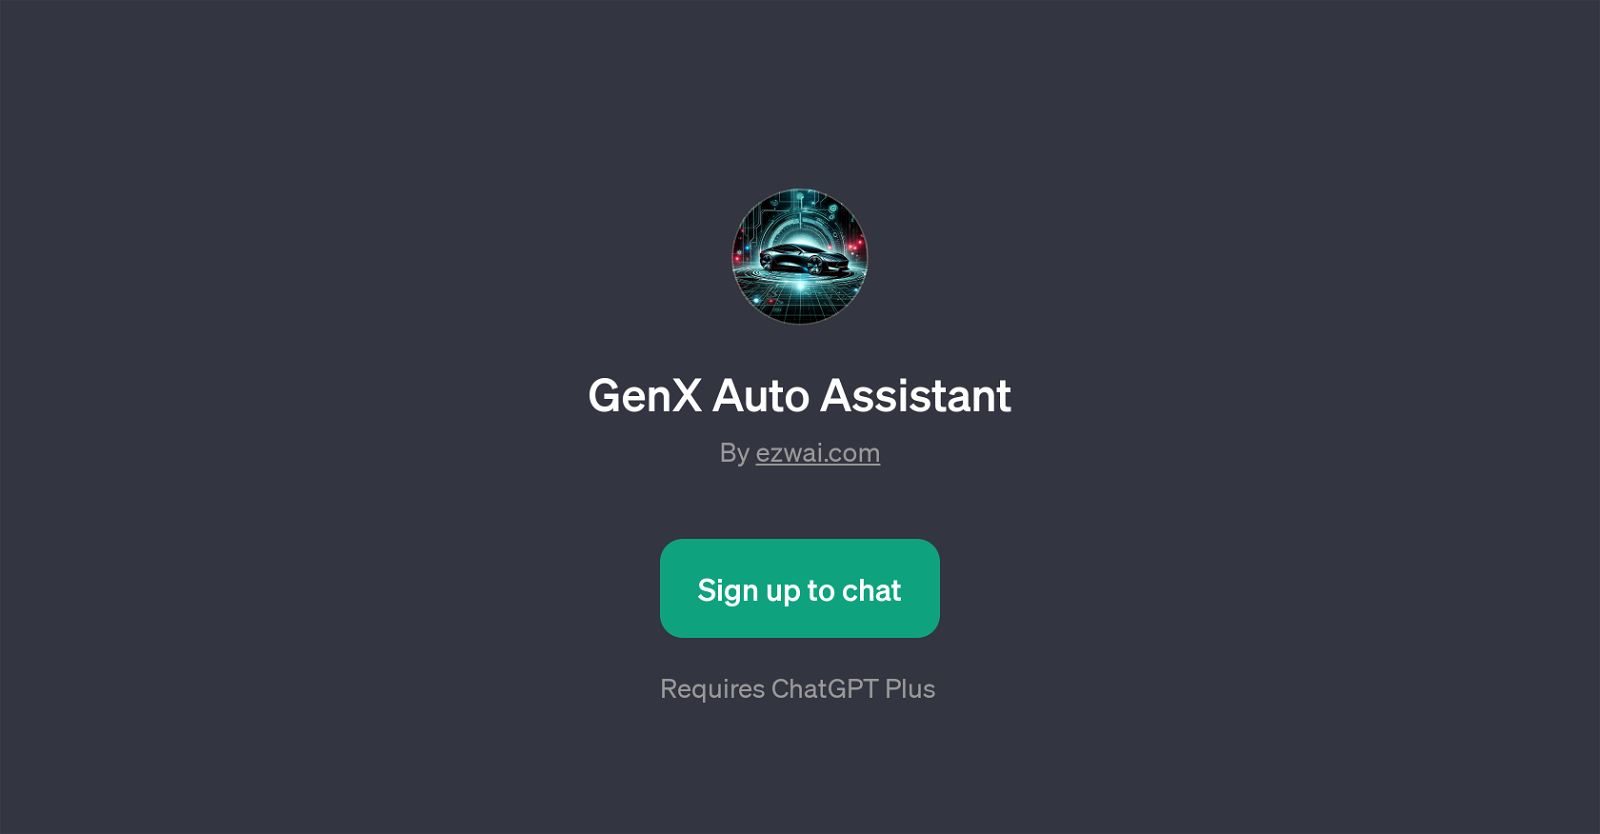 GenX Auto Assistant website